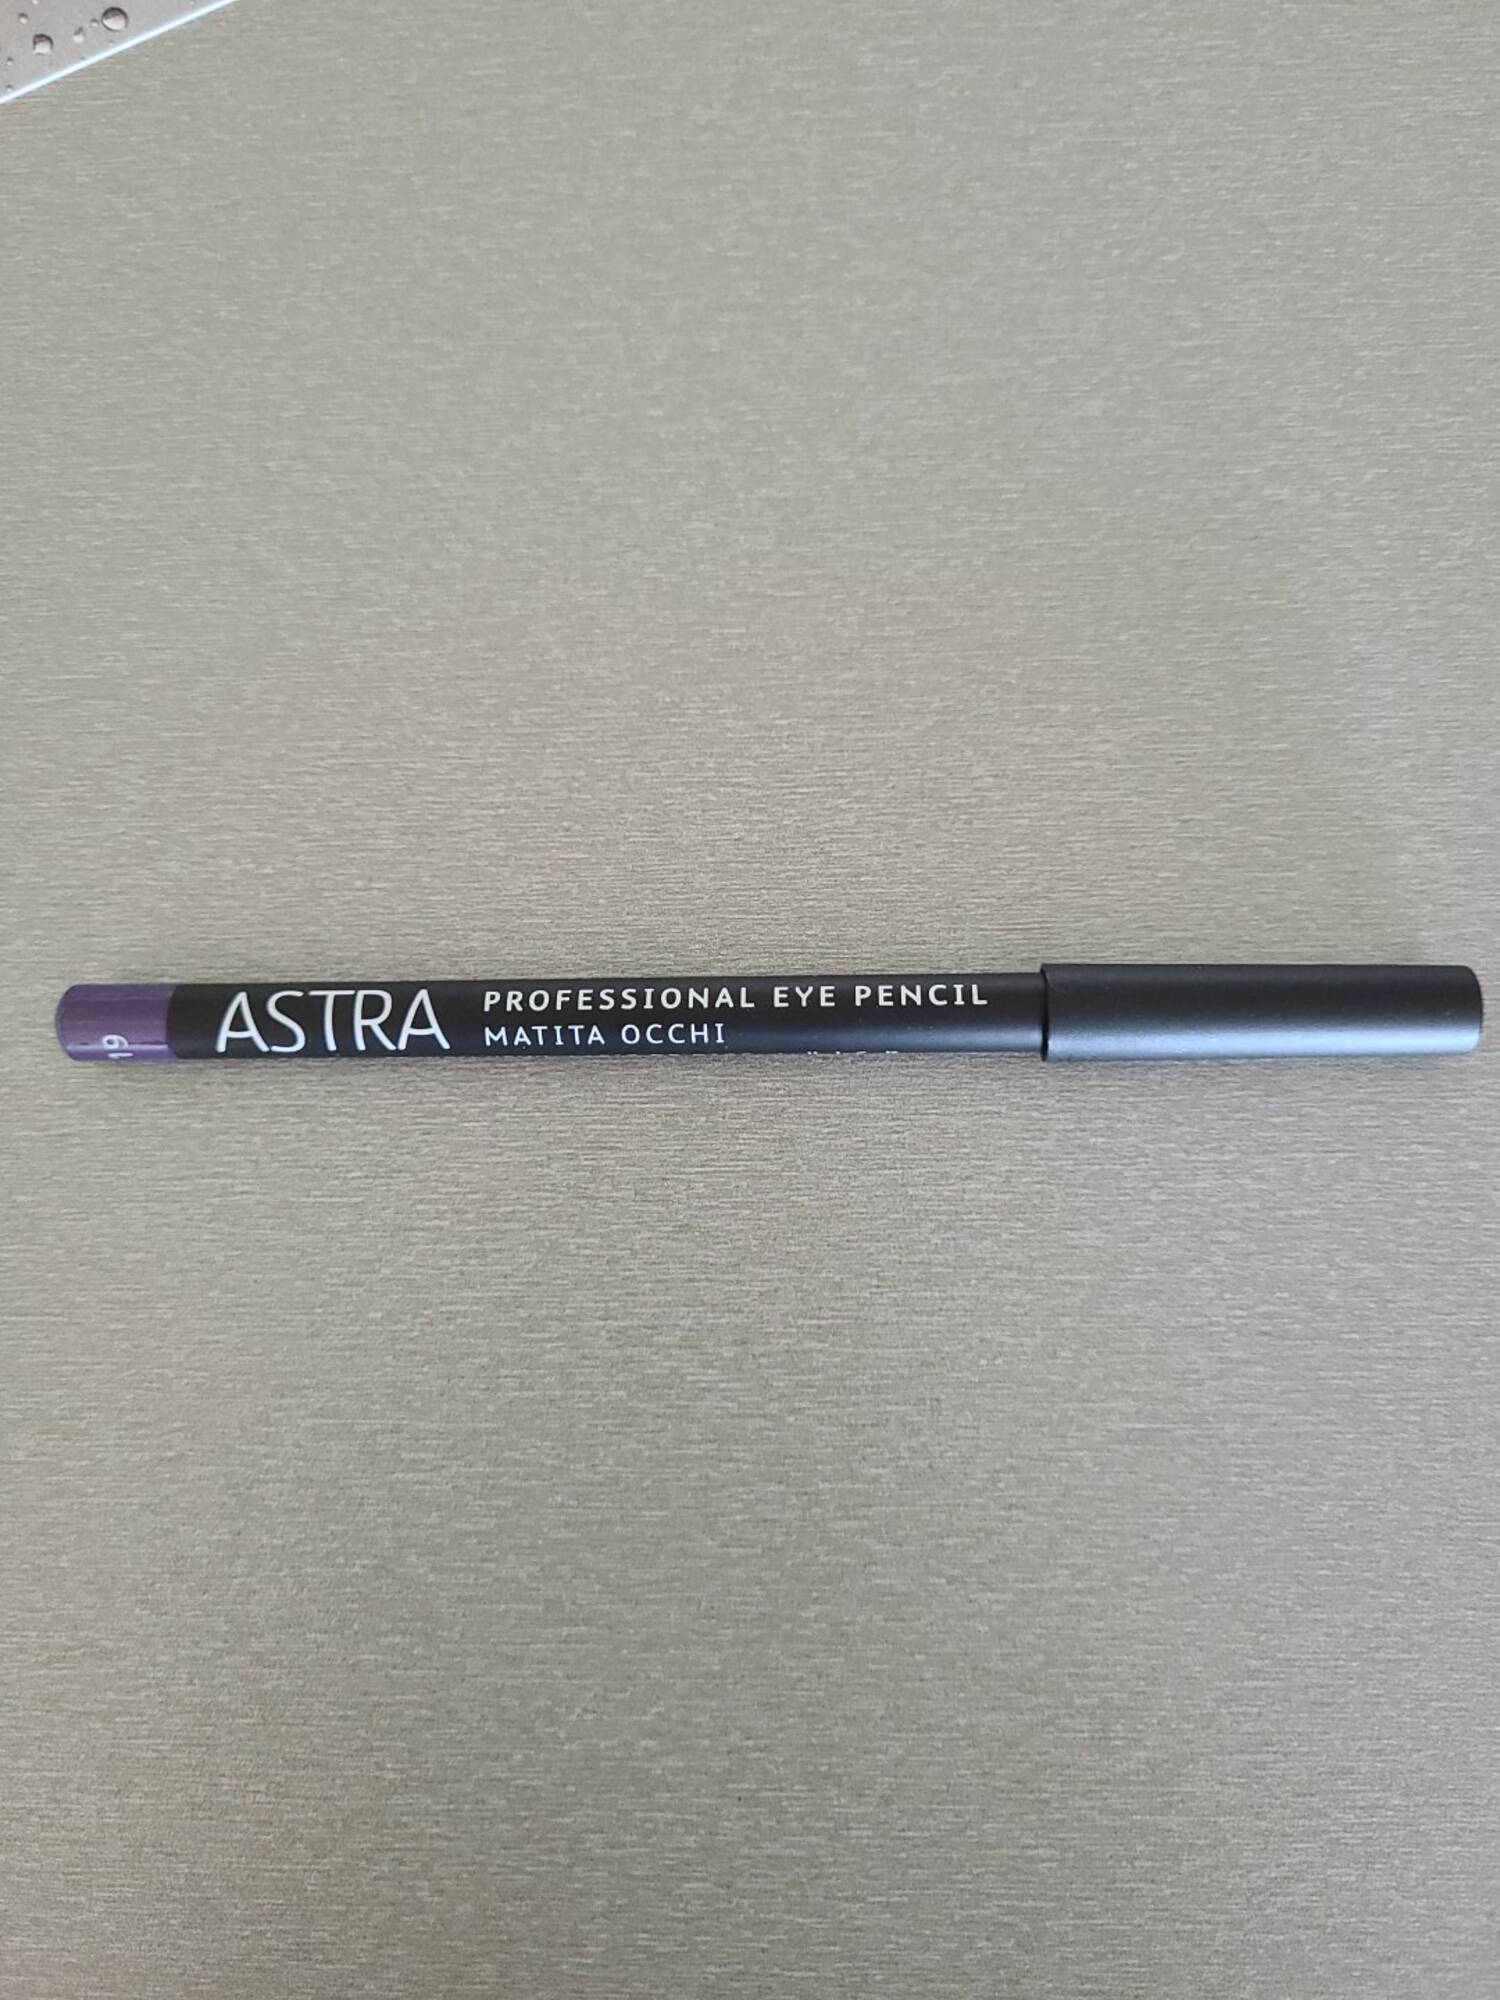 ASTRA - Matita occhi - Professionnel eyes pencil